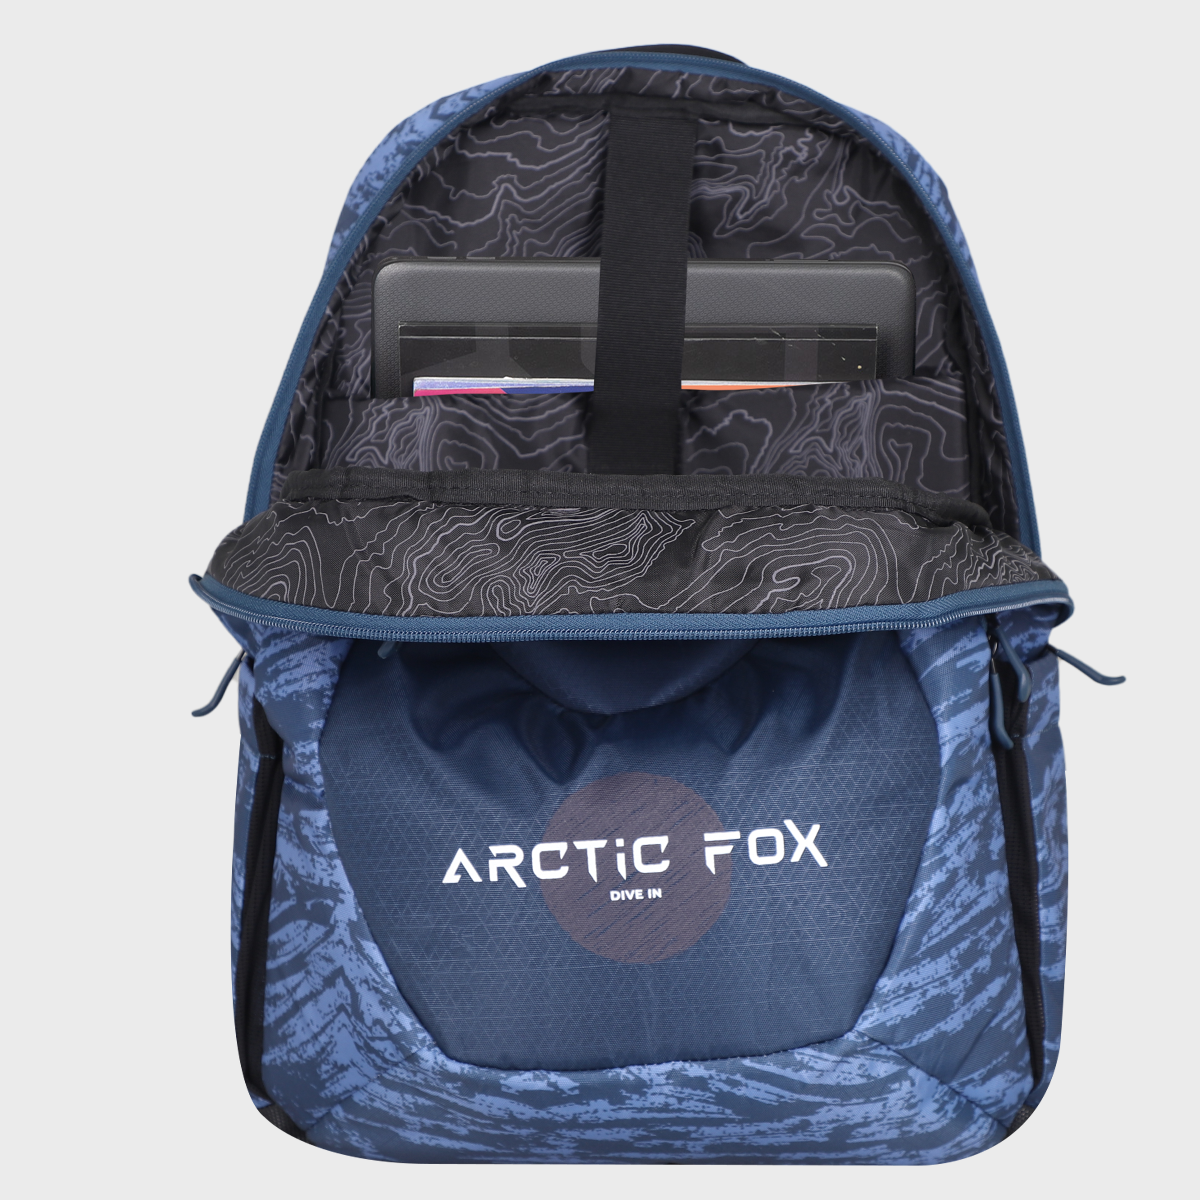 Arctic Fox Samurai 35L Laptop Backpack